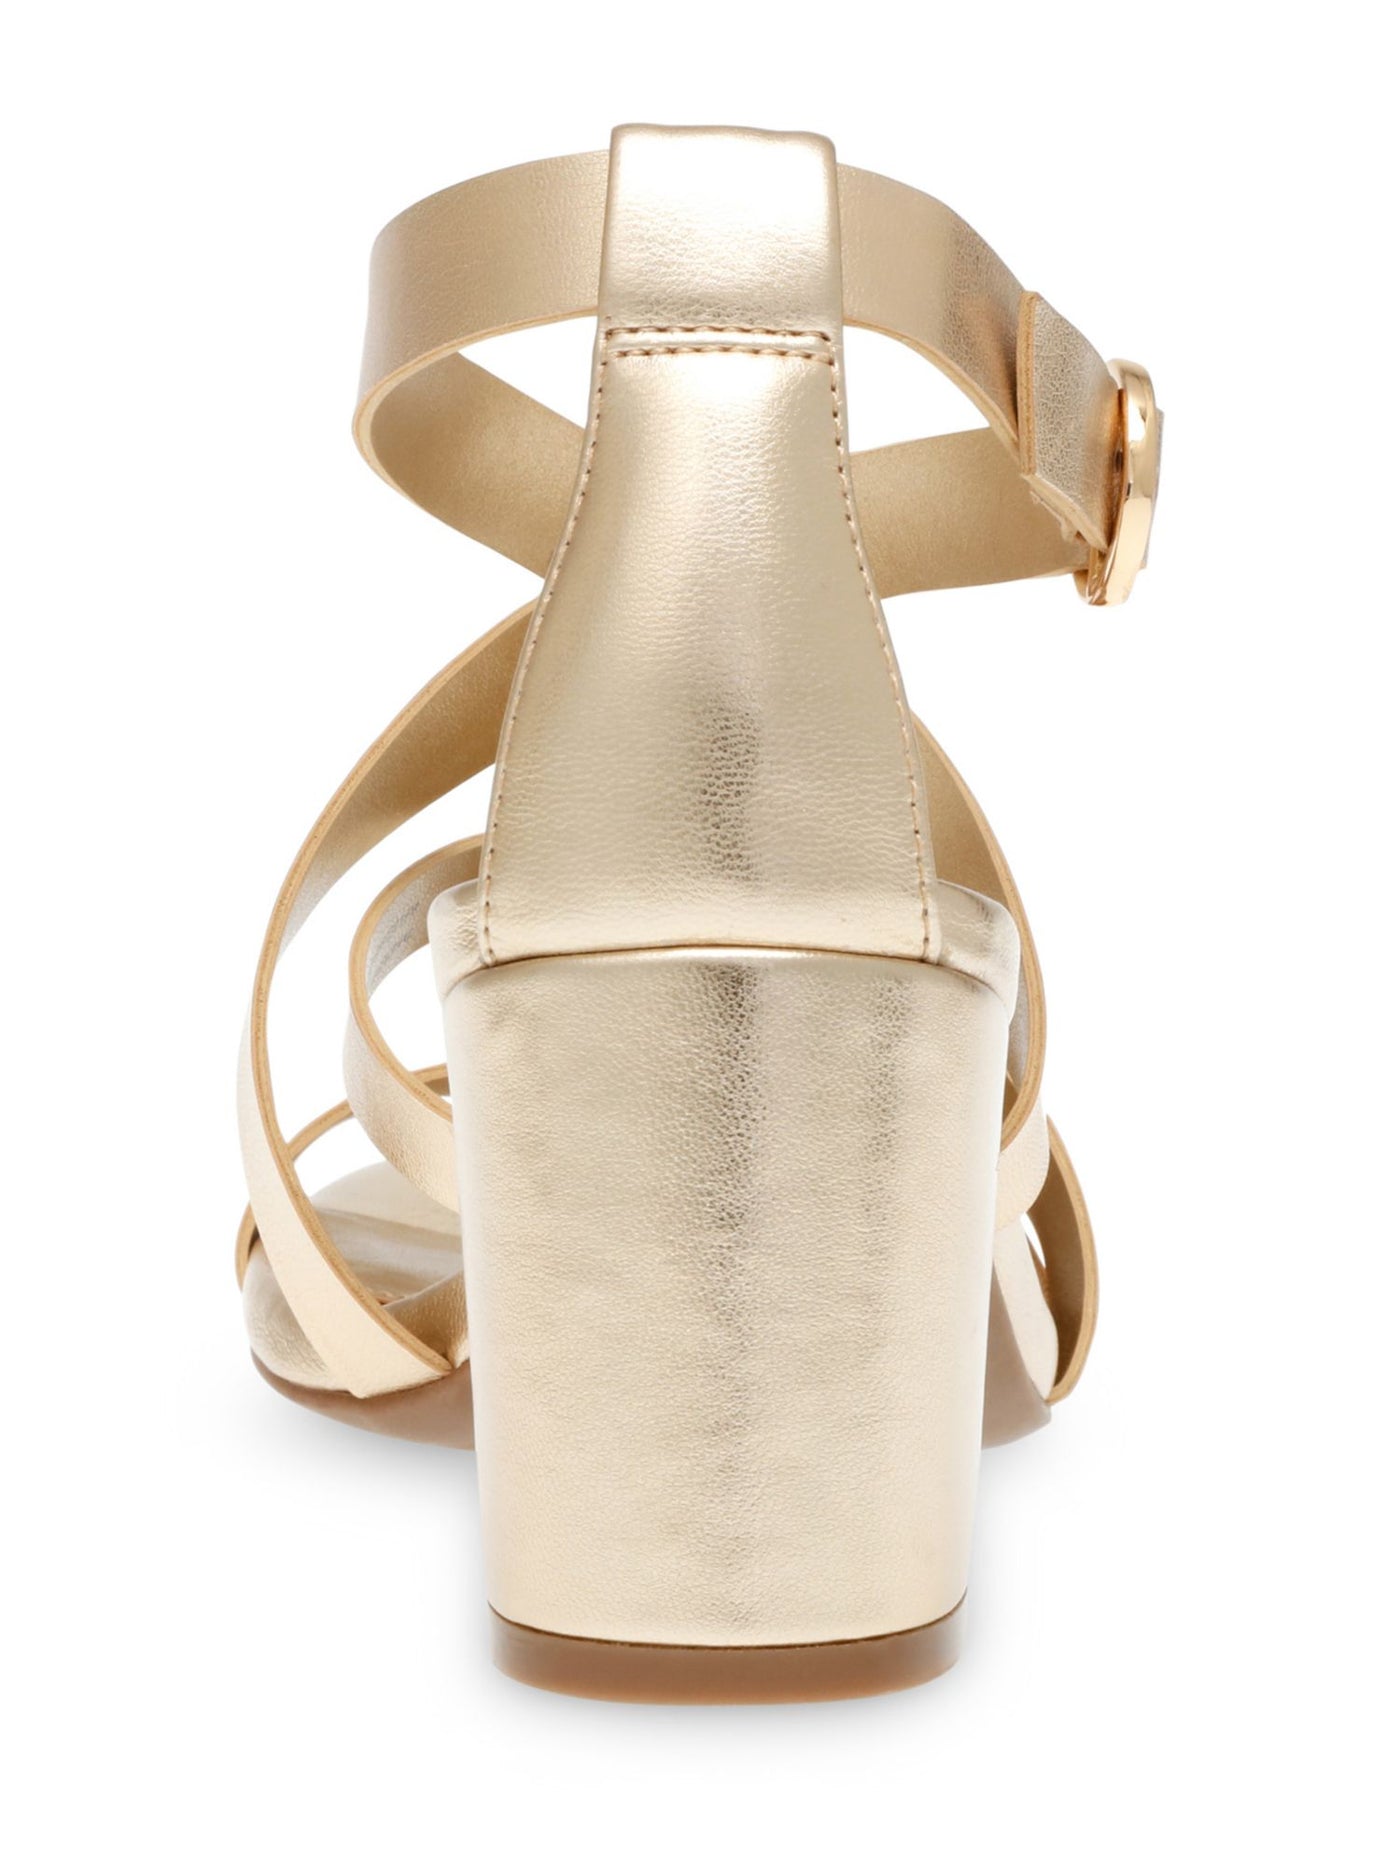 ANNE KLEIN Womens Gold Padded Asymmetrical Strappy Rowen Round Toe Block Heel Buckle Dress Sandals Shoes 7.5 M